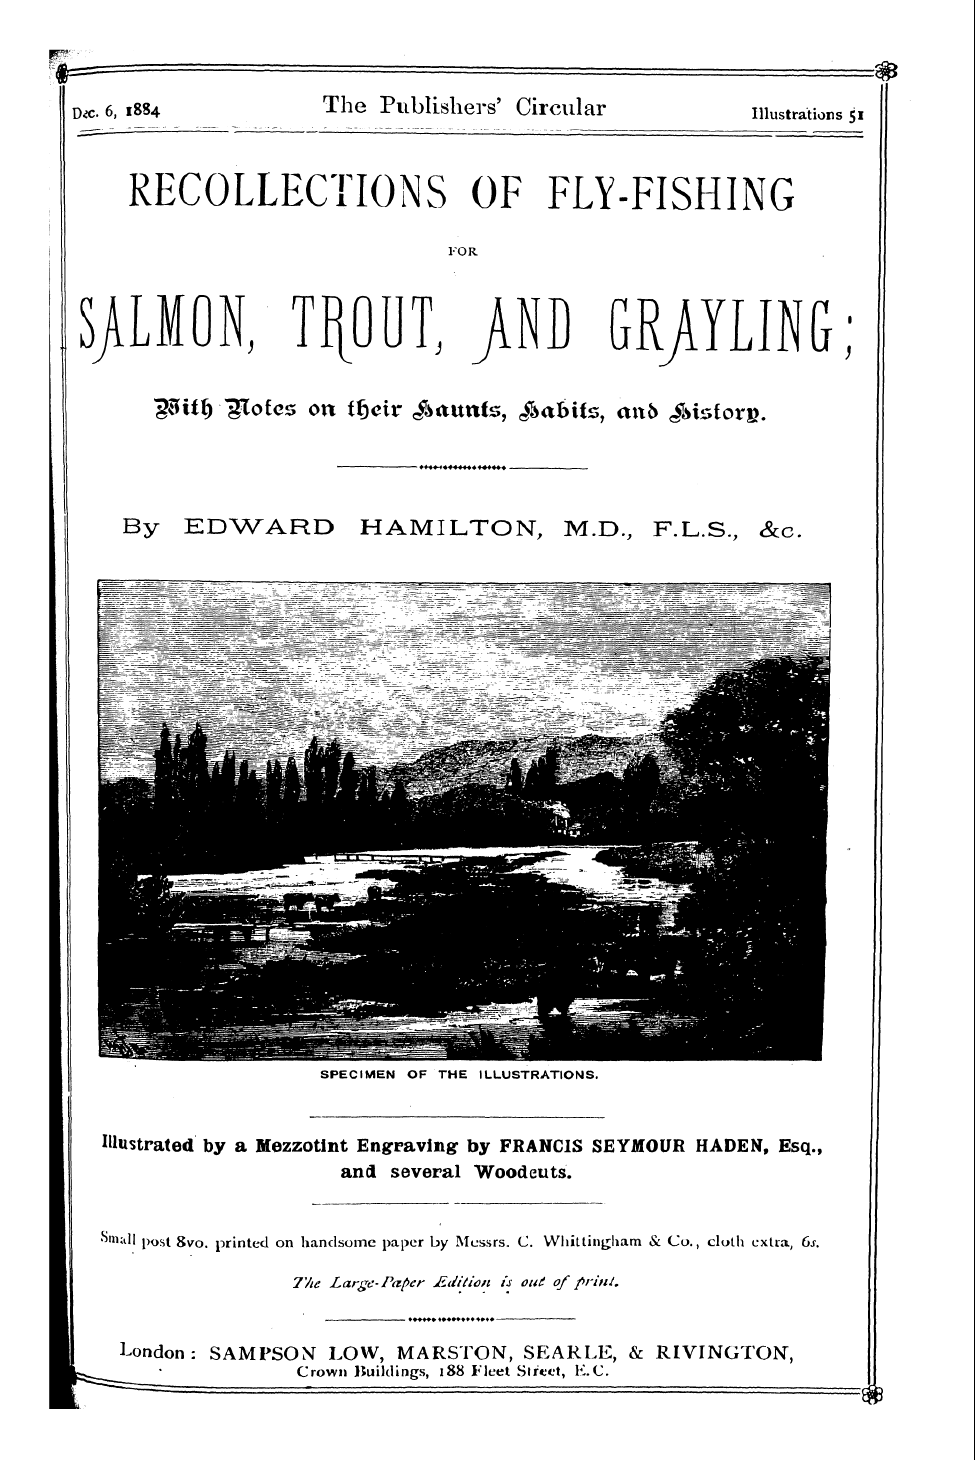 Publishers’ Circular (1880-1890): jS F Y, 1st edition - Ad14901